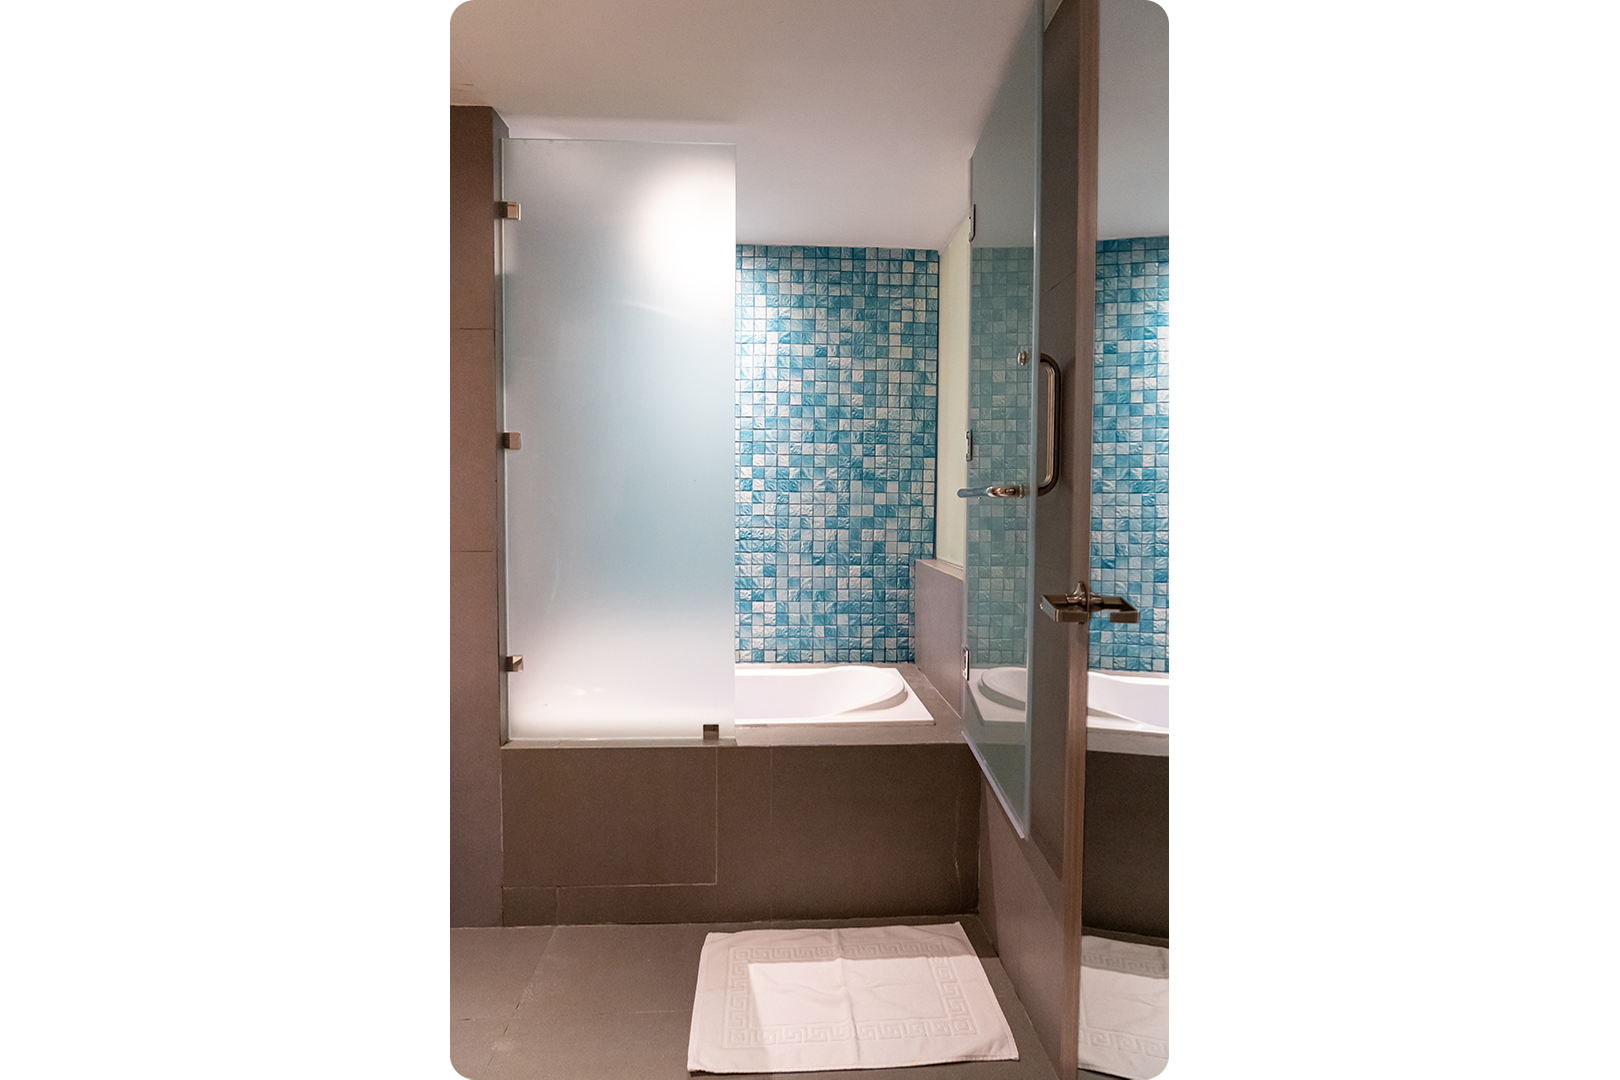 photo of yello hotel comfort room/bathroom